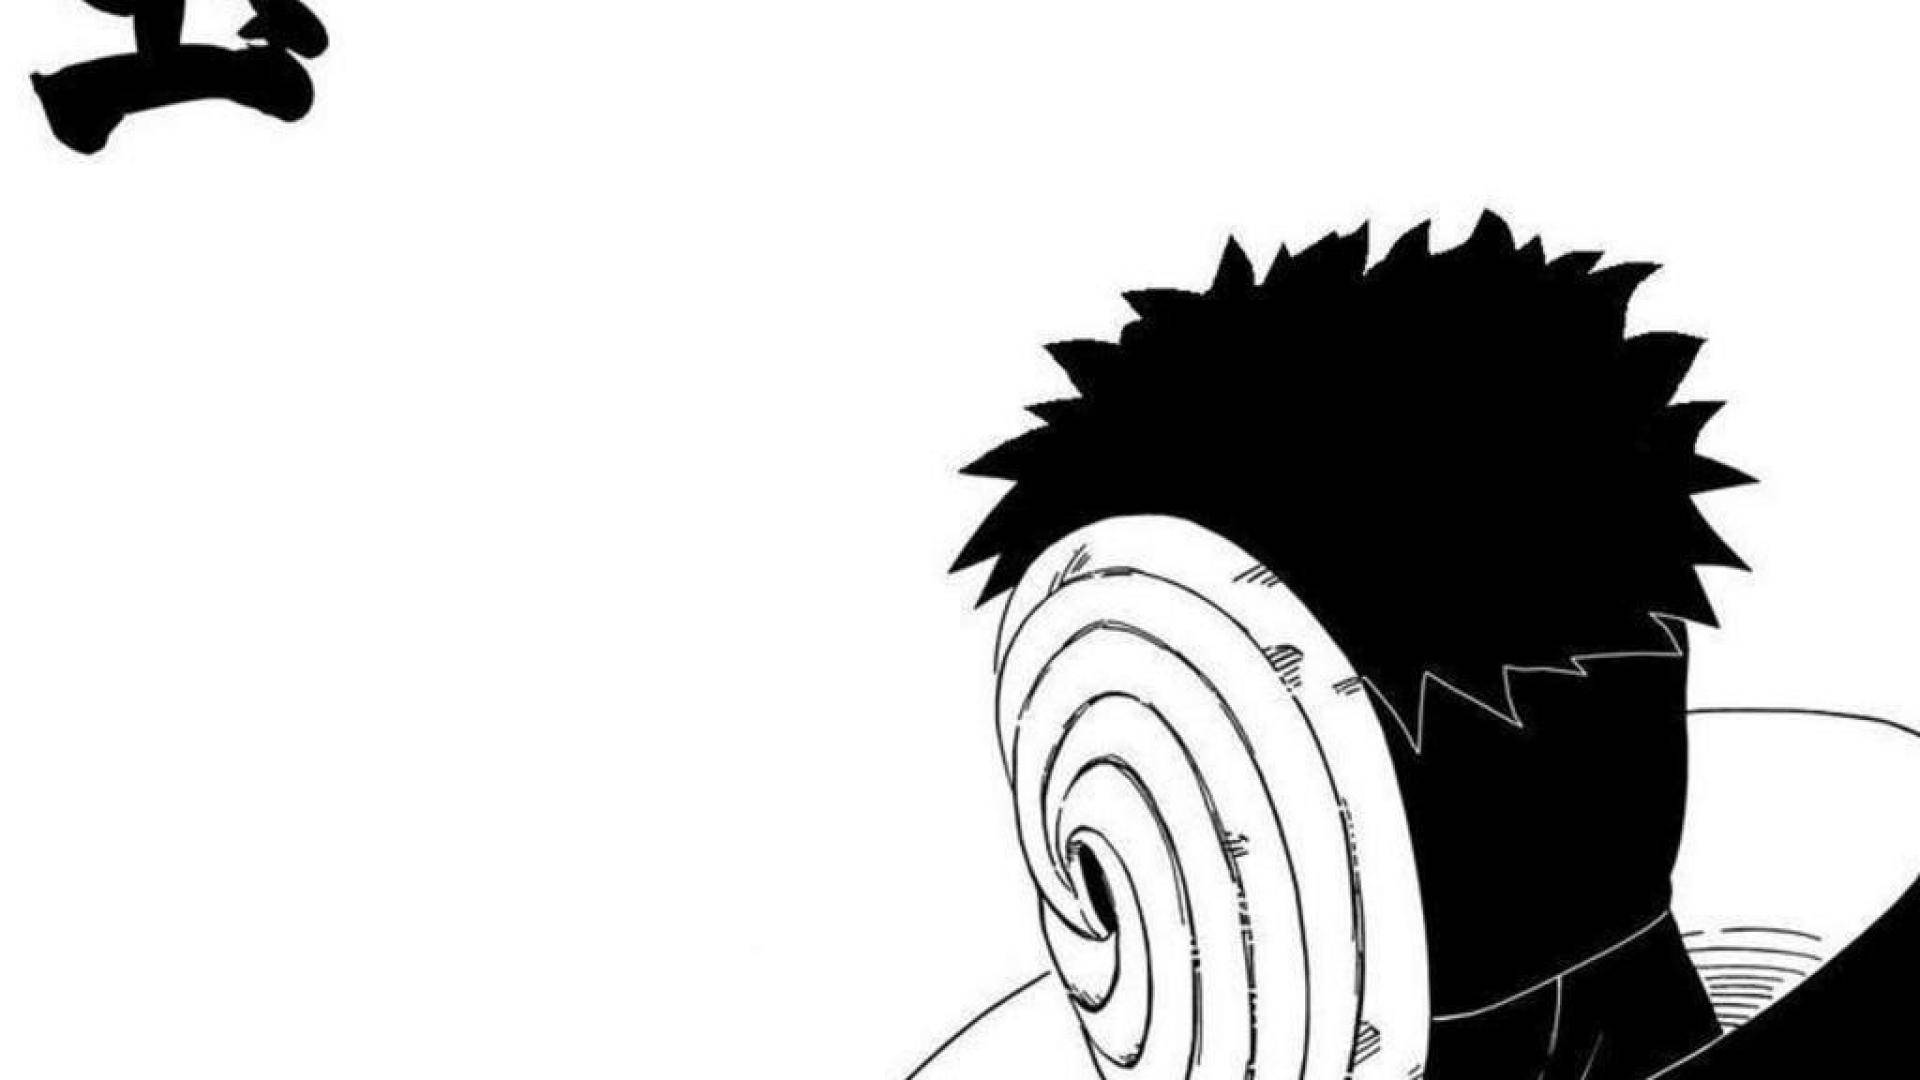 Obito From The Popular Manga/anime Series Naruto Background